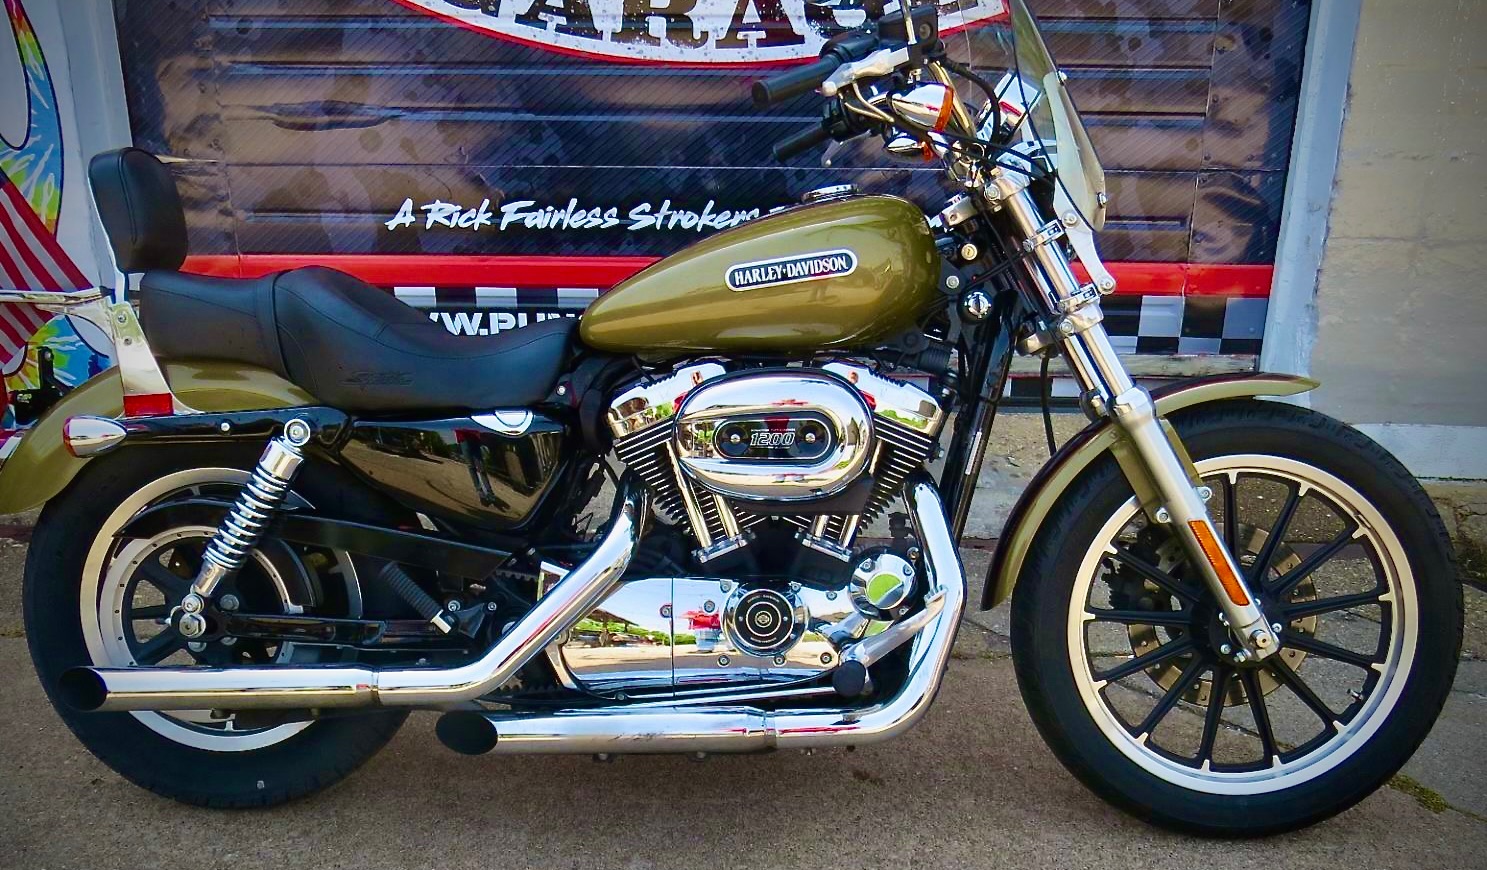 2007 Harley-Davidson Sportster® 1200 Low in Dallas, Texas - Photo 1